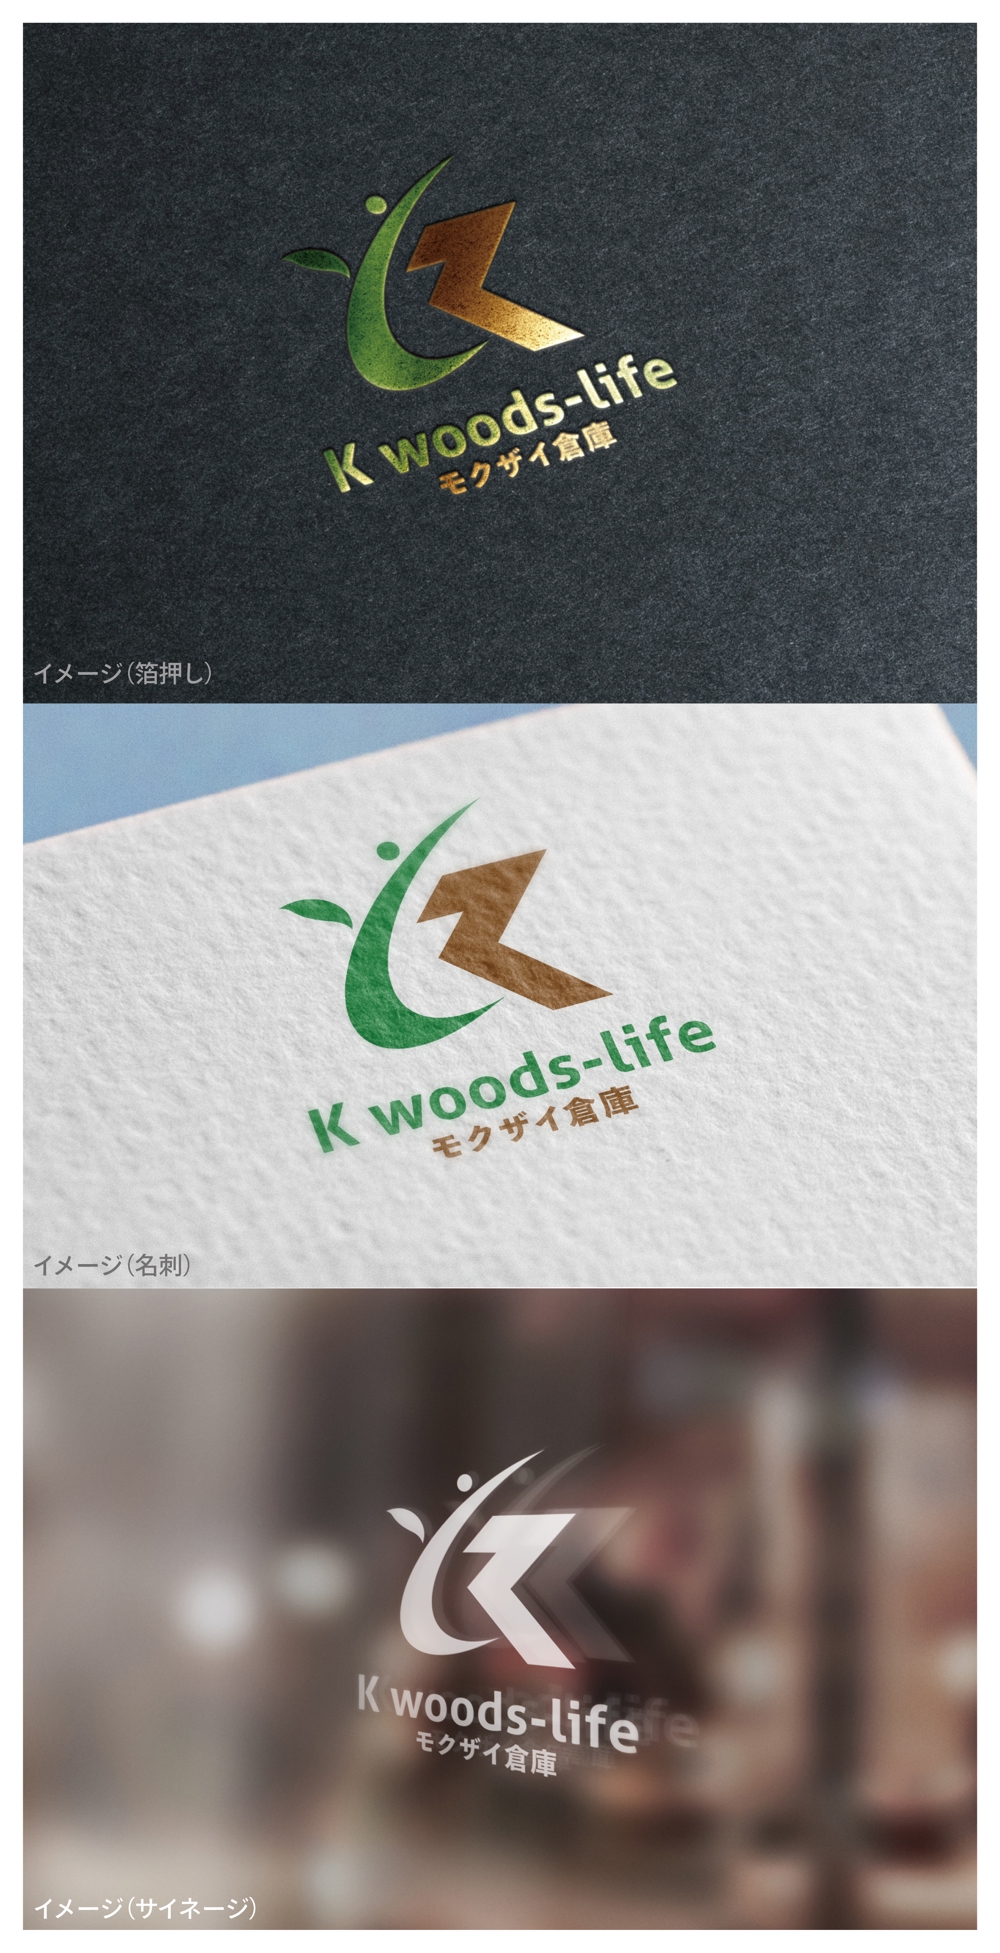 Ｋ woods-life_logo01_01.jpg